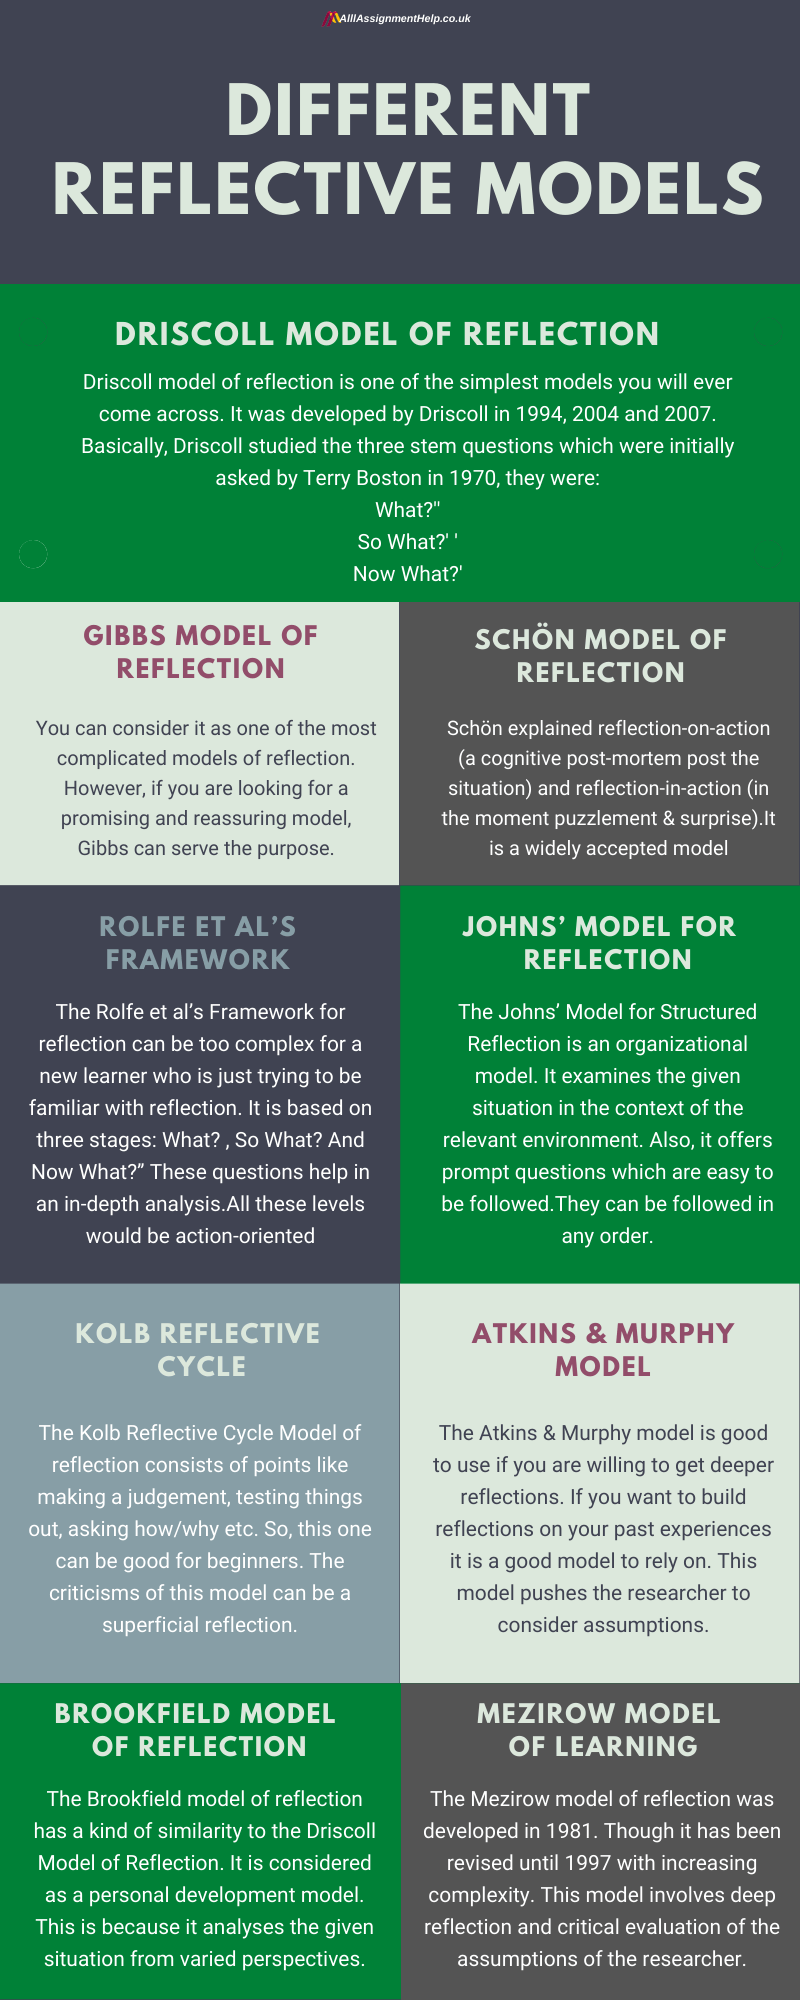 johns model of reflection